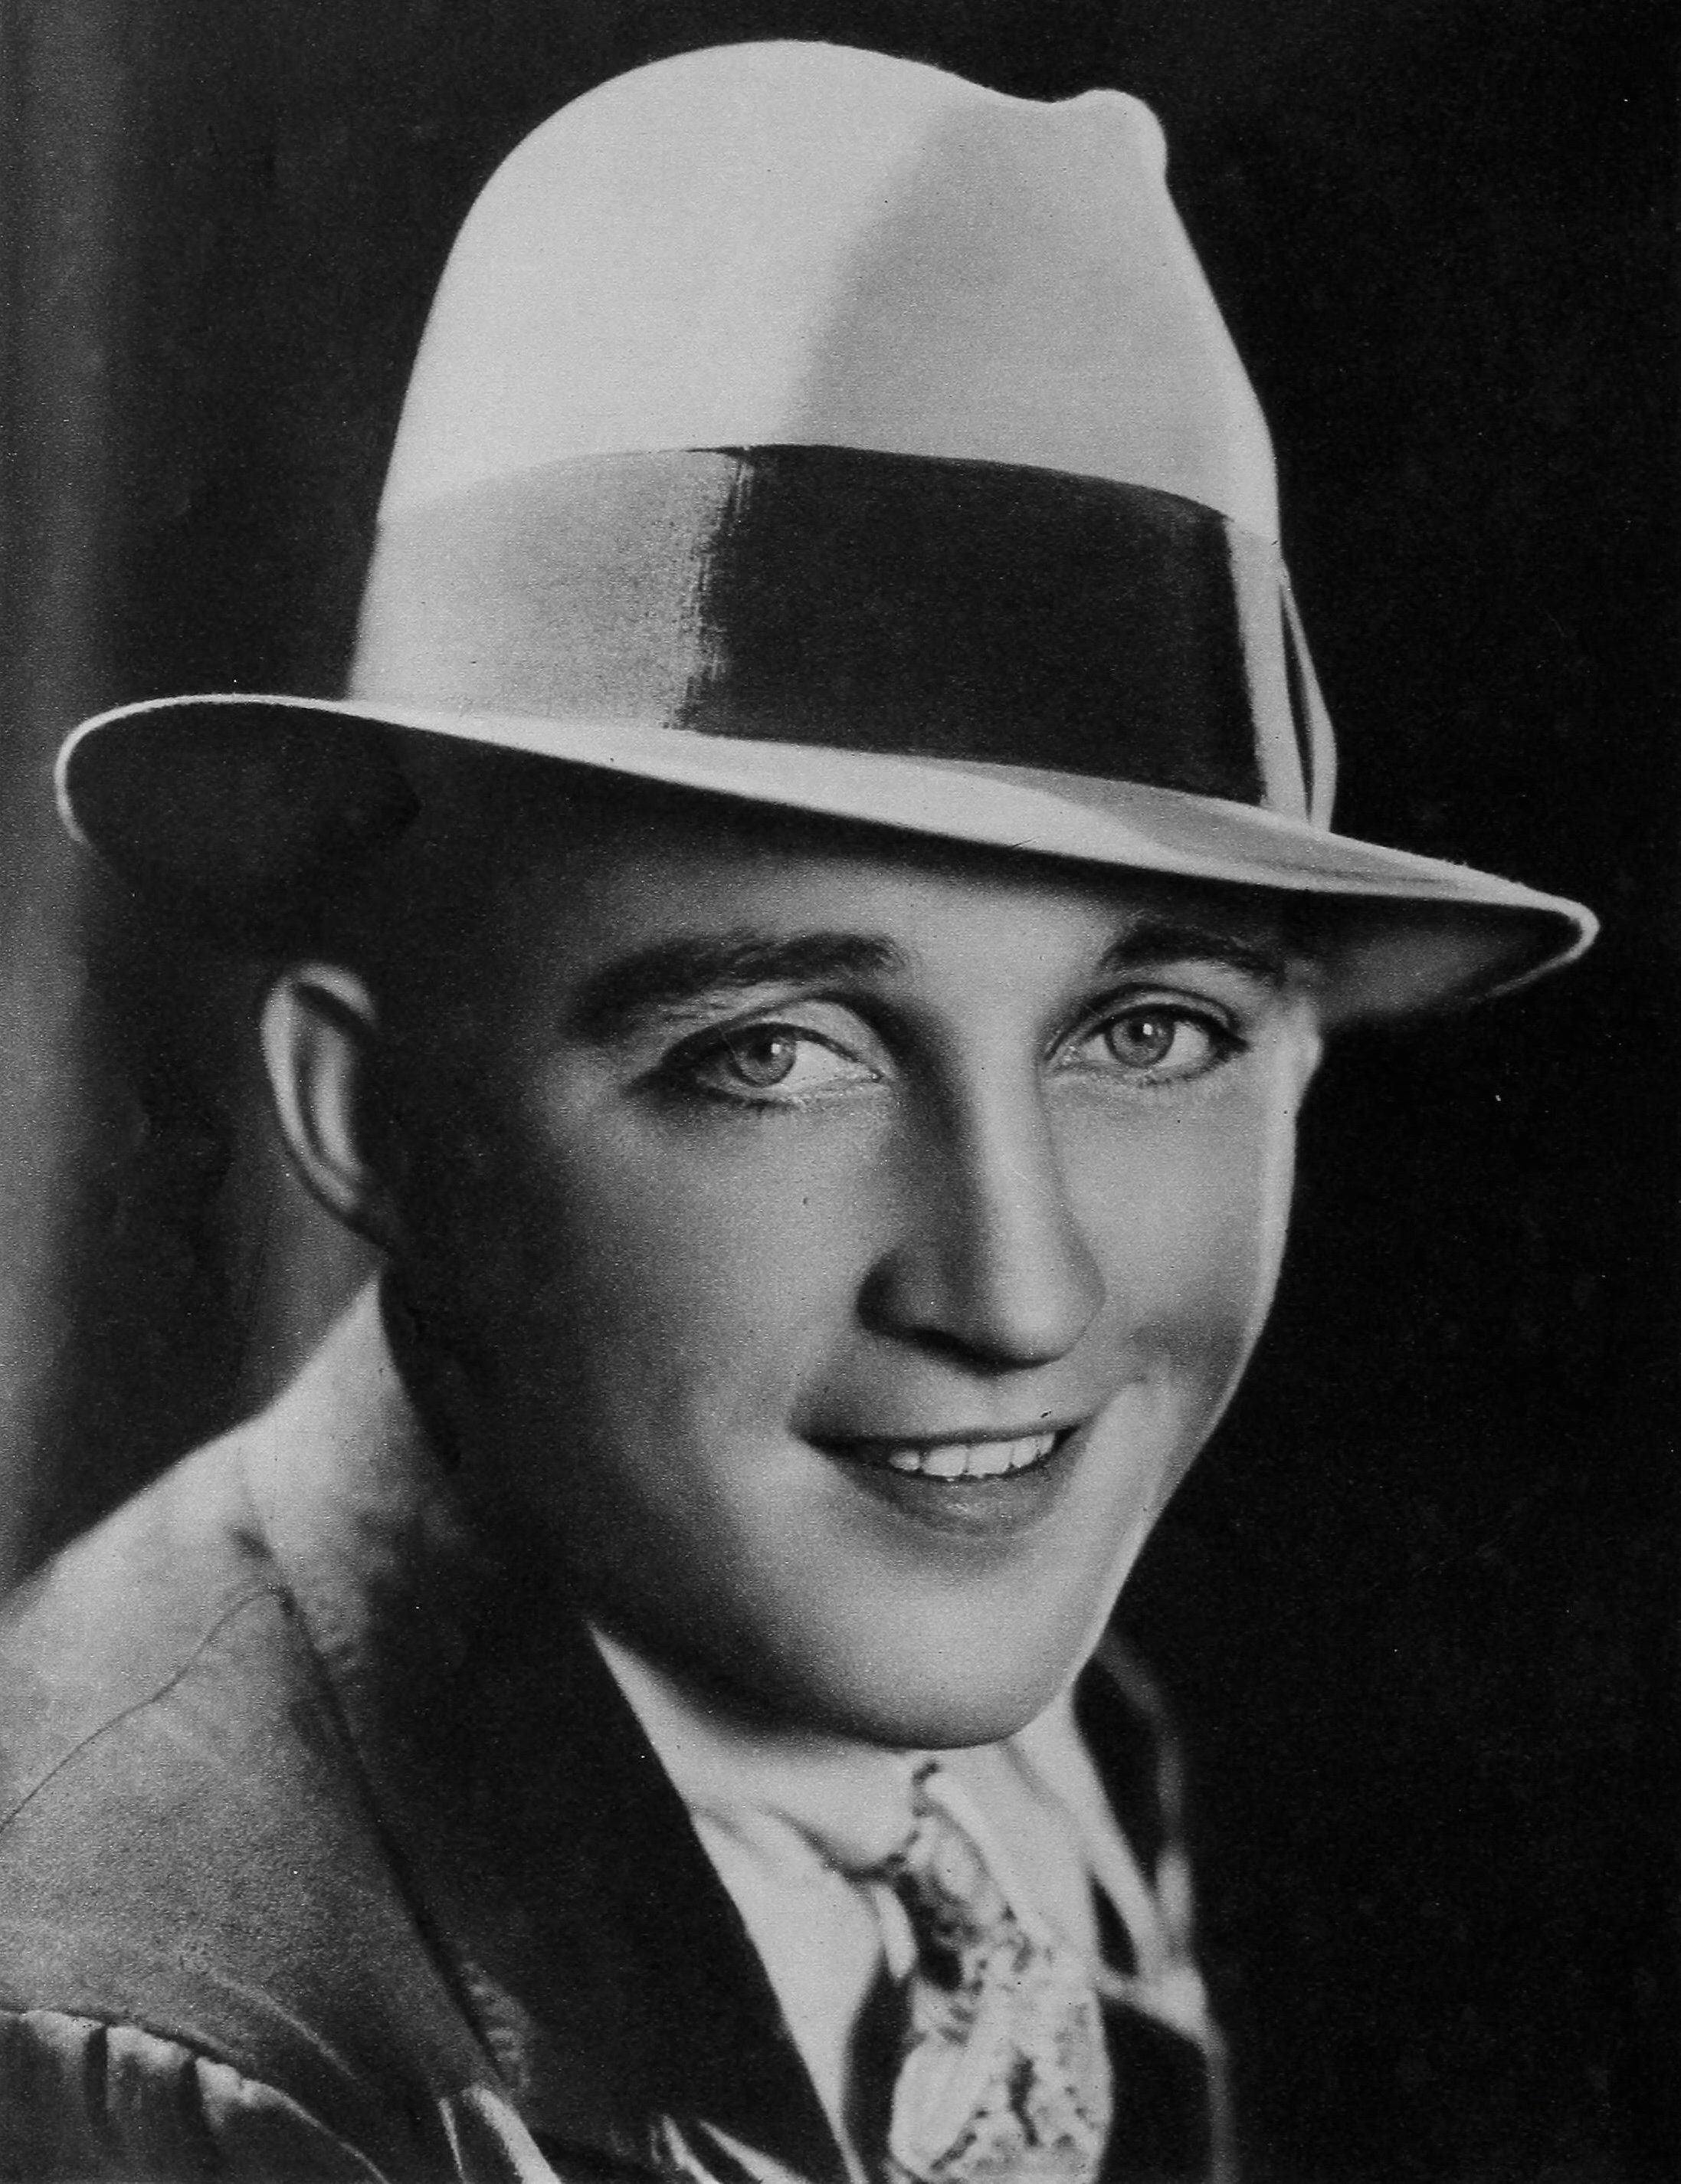 Bing Crosby in 1932. | Source: Wikimedia Commons